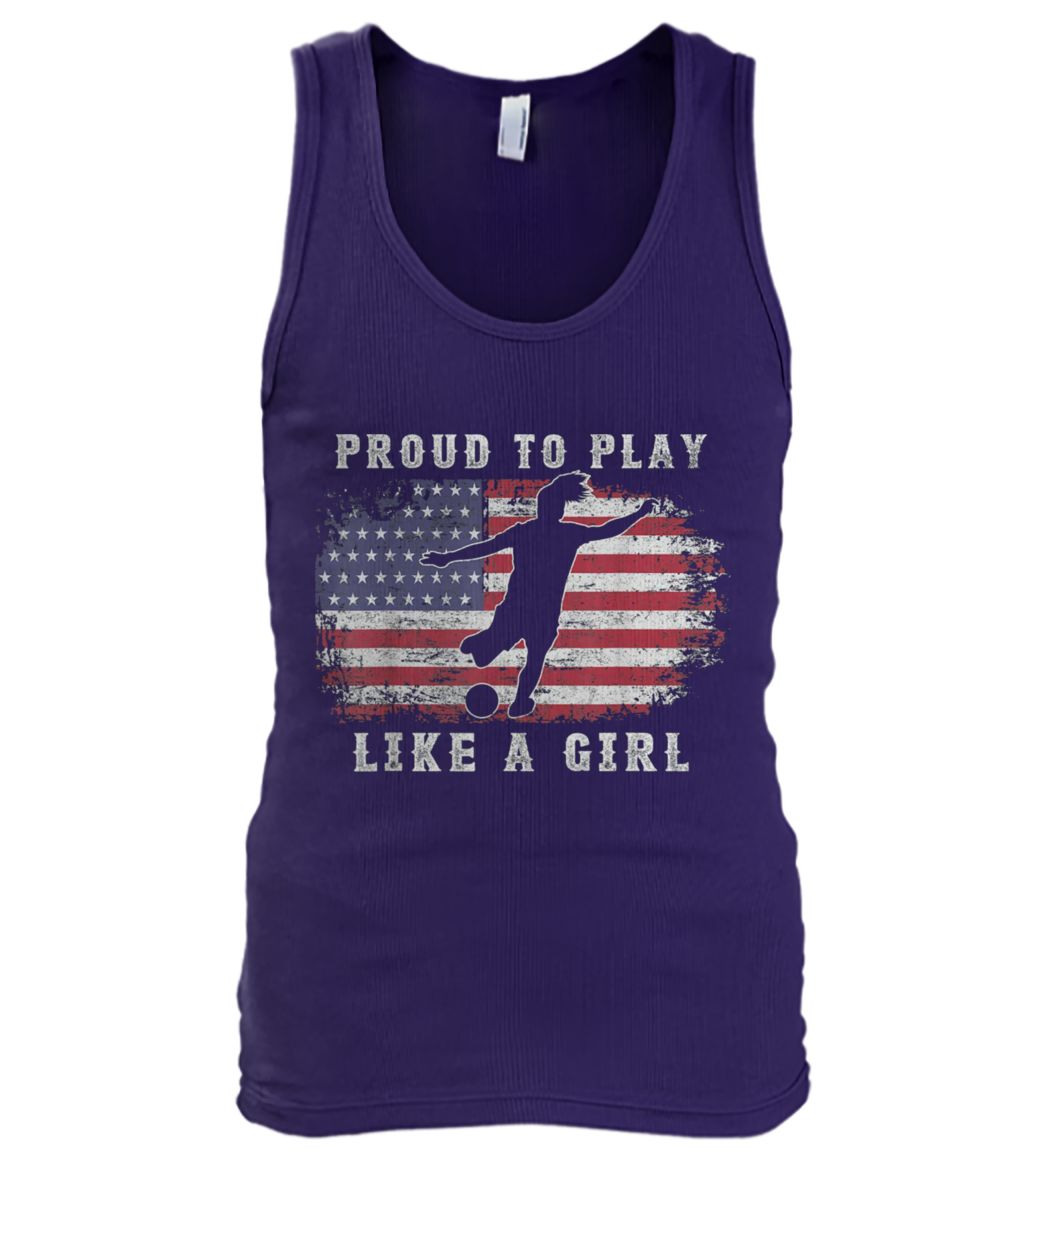 USA women soccer american flag proud to play like a girl men's tank top